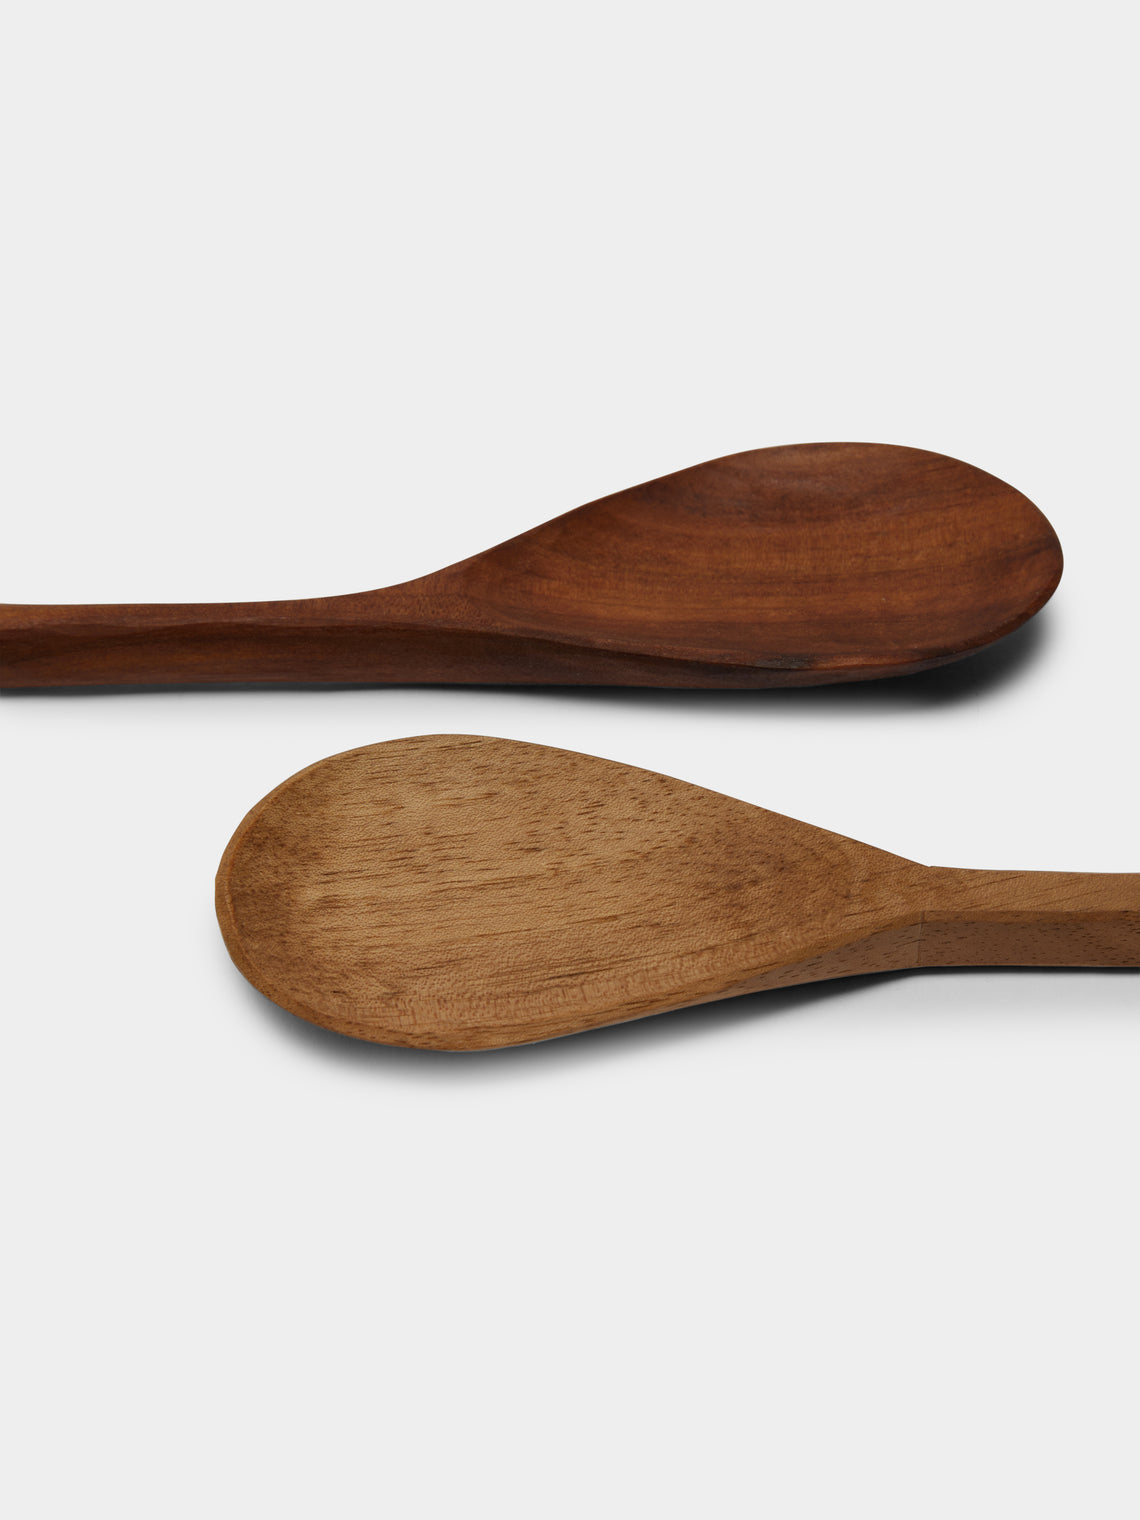 Rabea Gebler - Oiled Cherry Wood Spoons (Set of 4) -  - ABASK